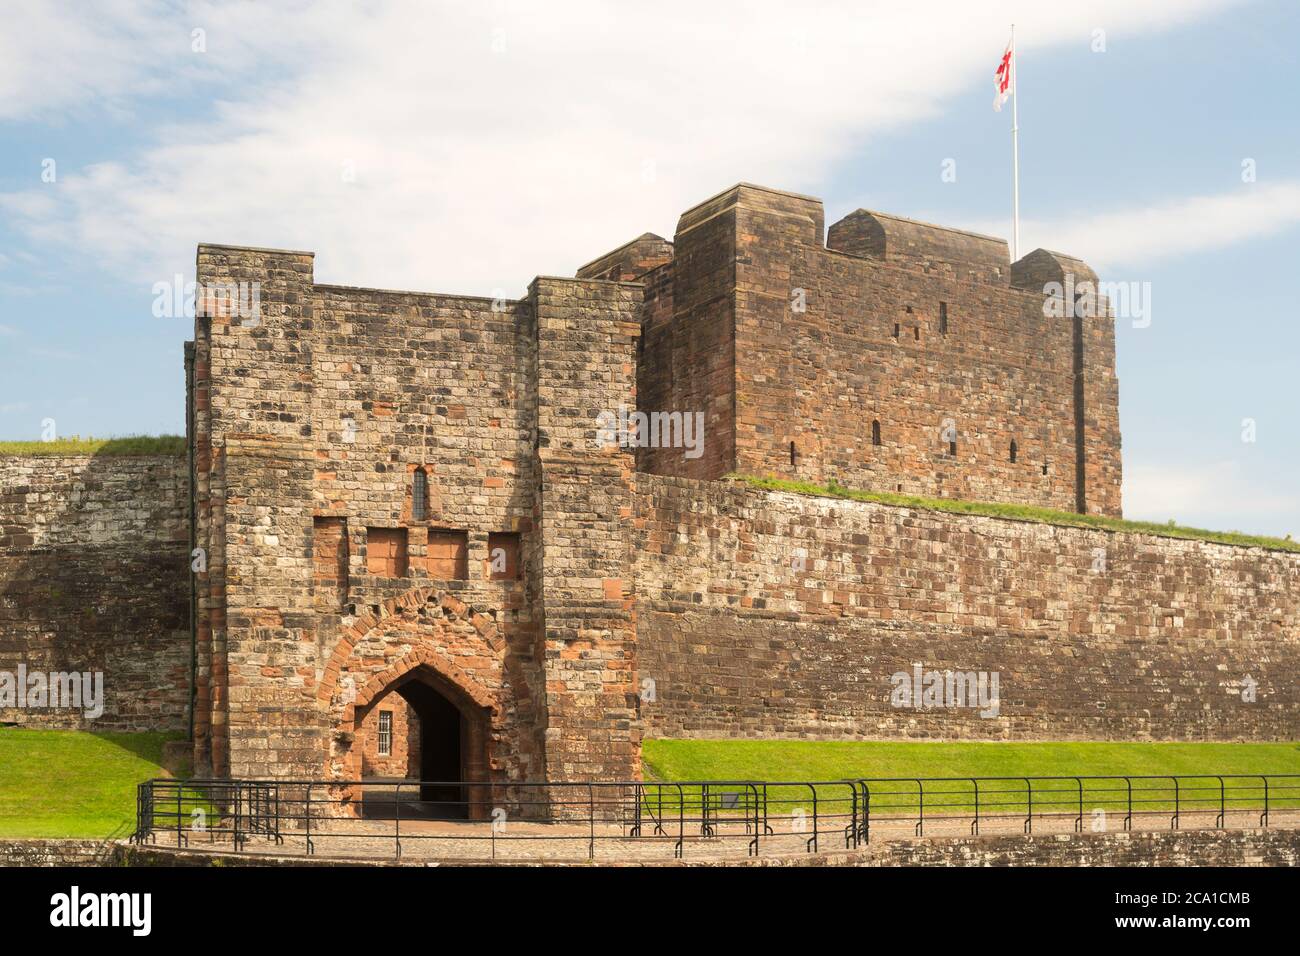 The Captain's Tower and Keep of Carlis!e castle. Cumbria, England, UK Stock Photo